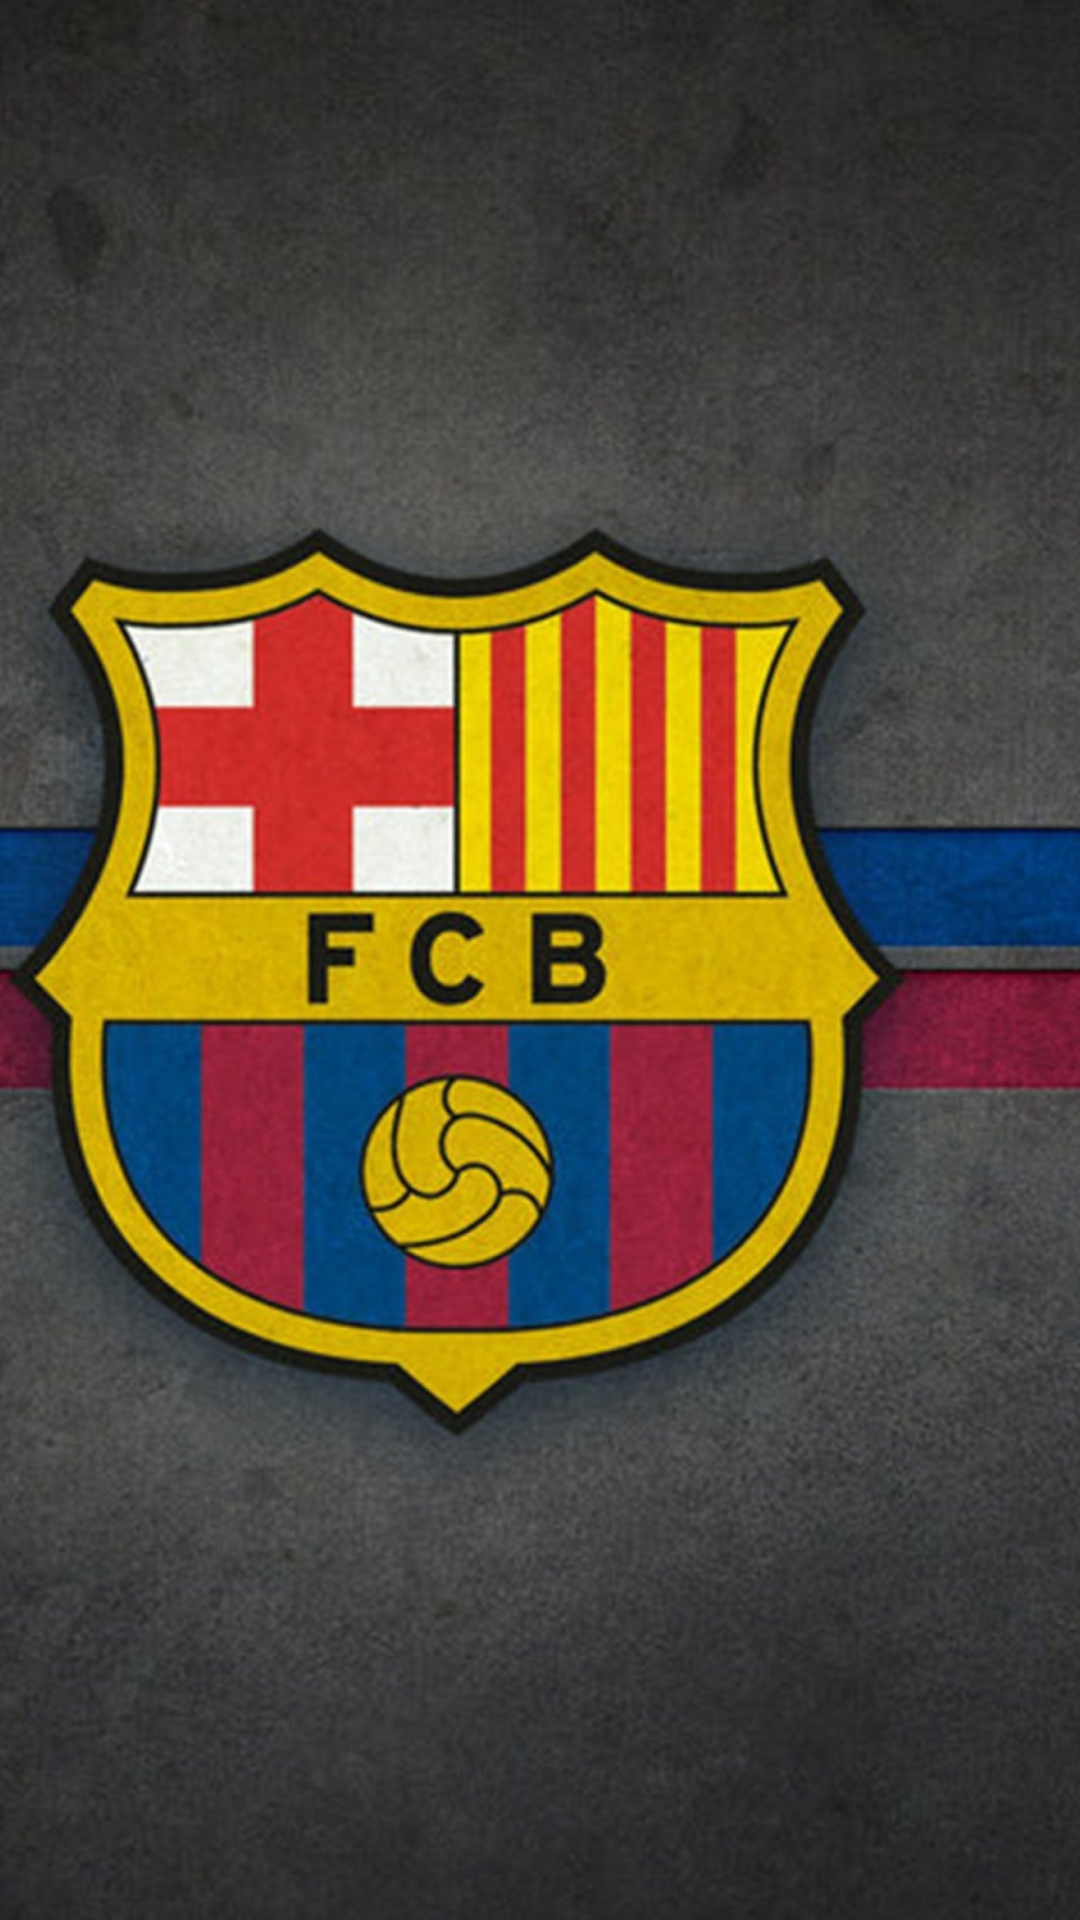 FC Barcelona wallpaper 1080x1920